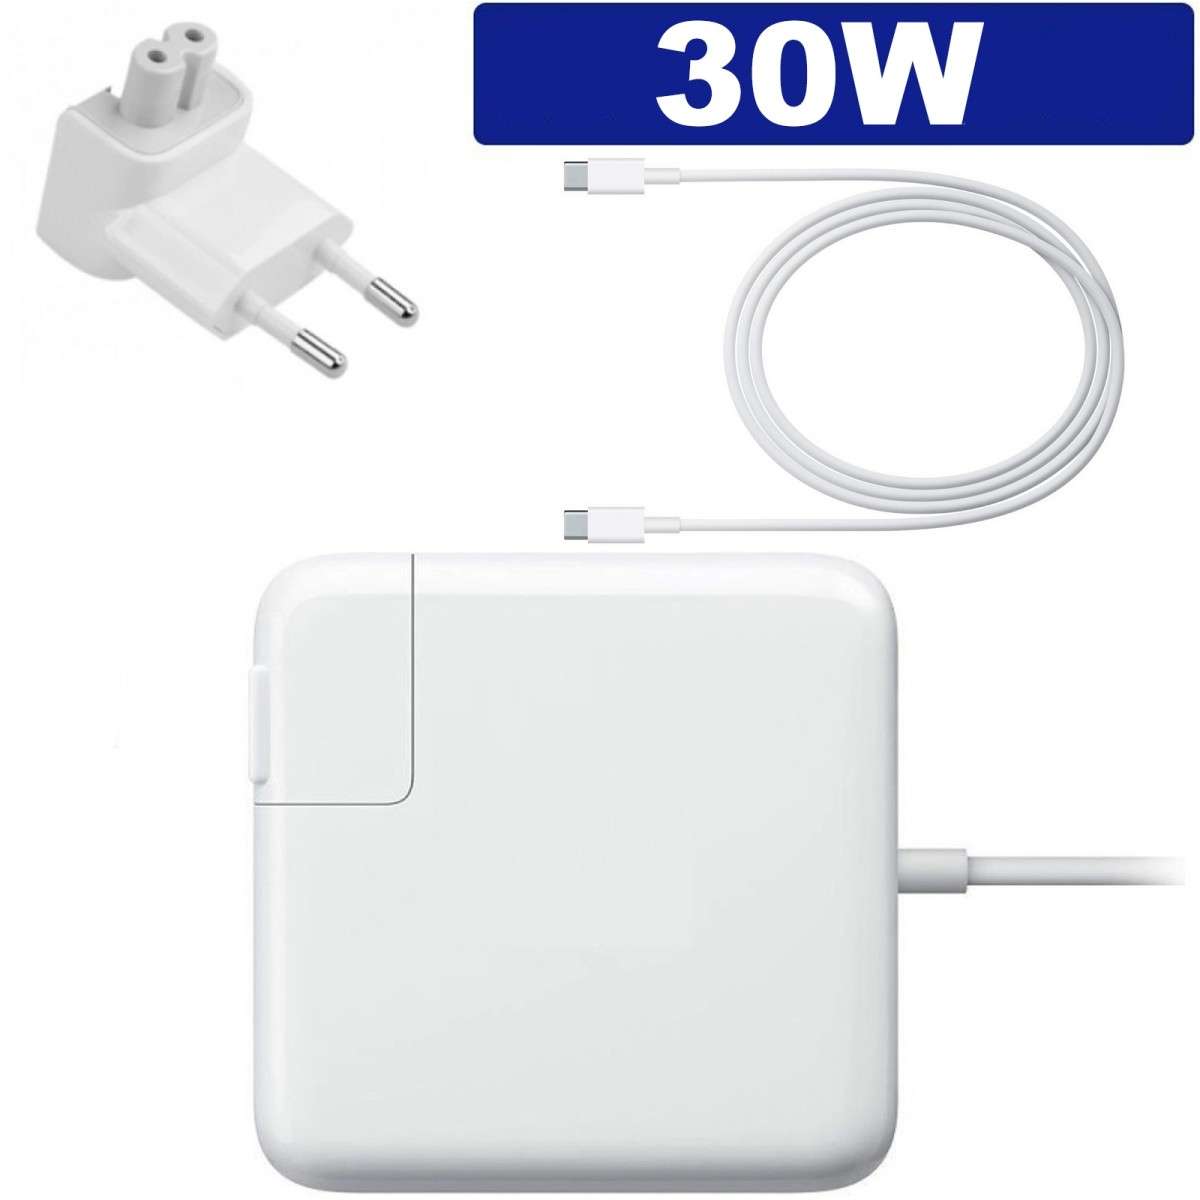 ✓ Cargador MacBook USB C 30W para Apple MacBook Air 2018